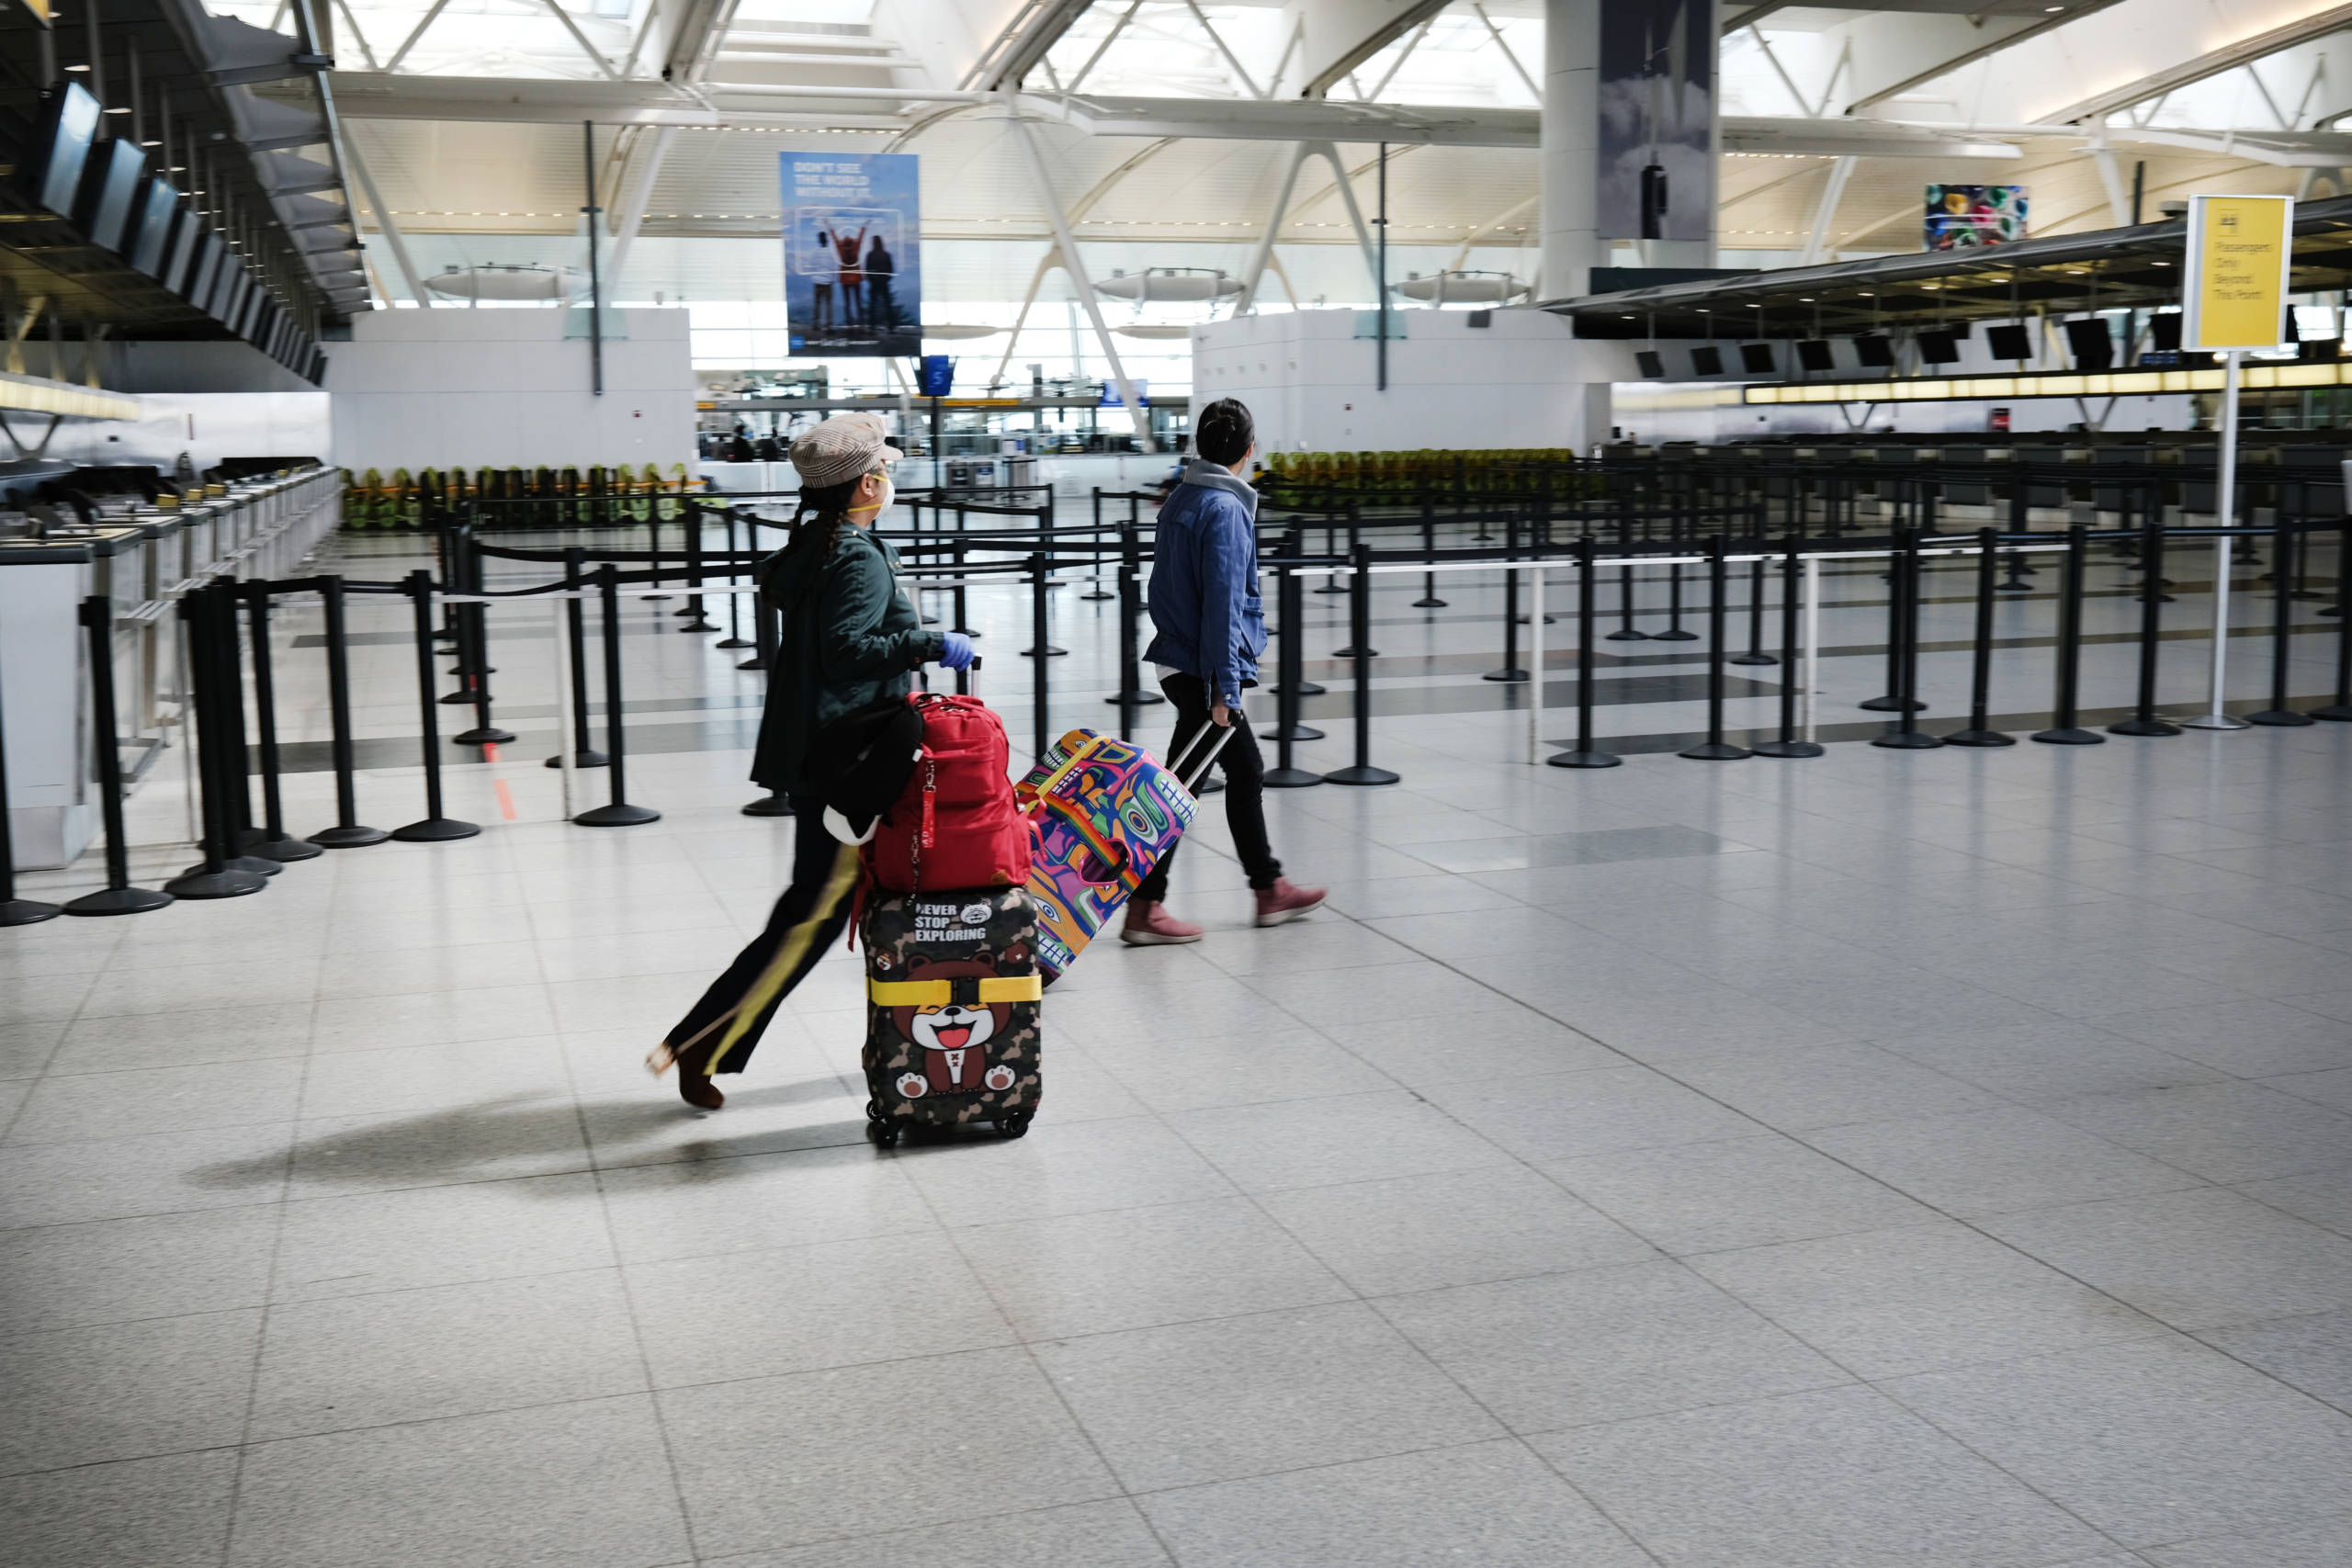 JFK Airport Usage Dwindles During Coronavirus Outbreak